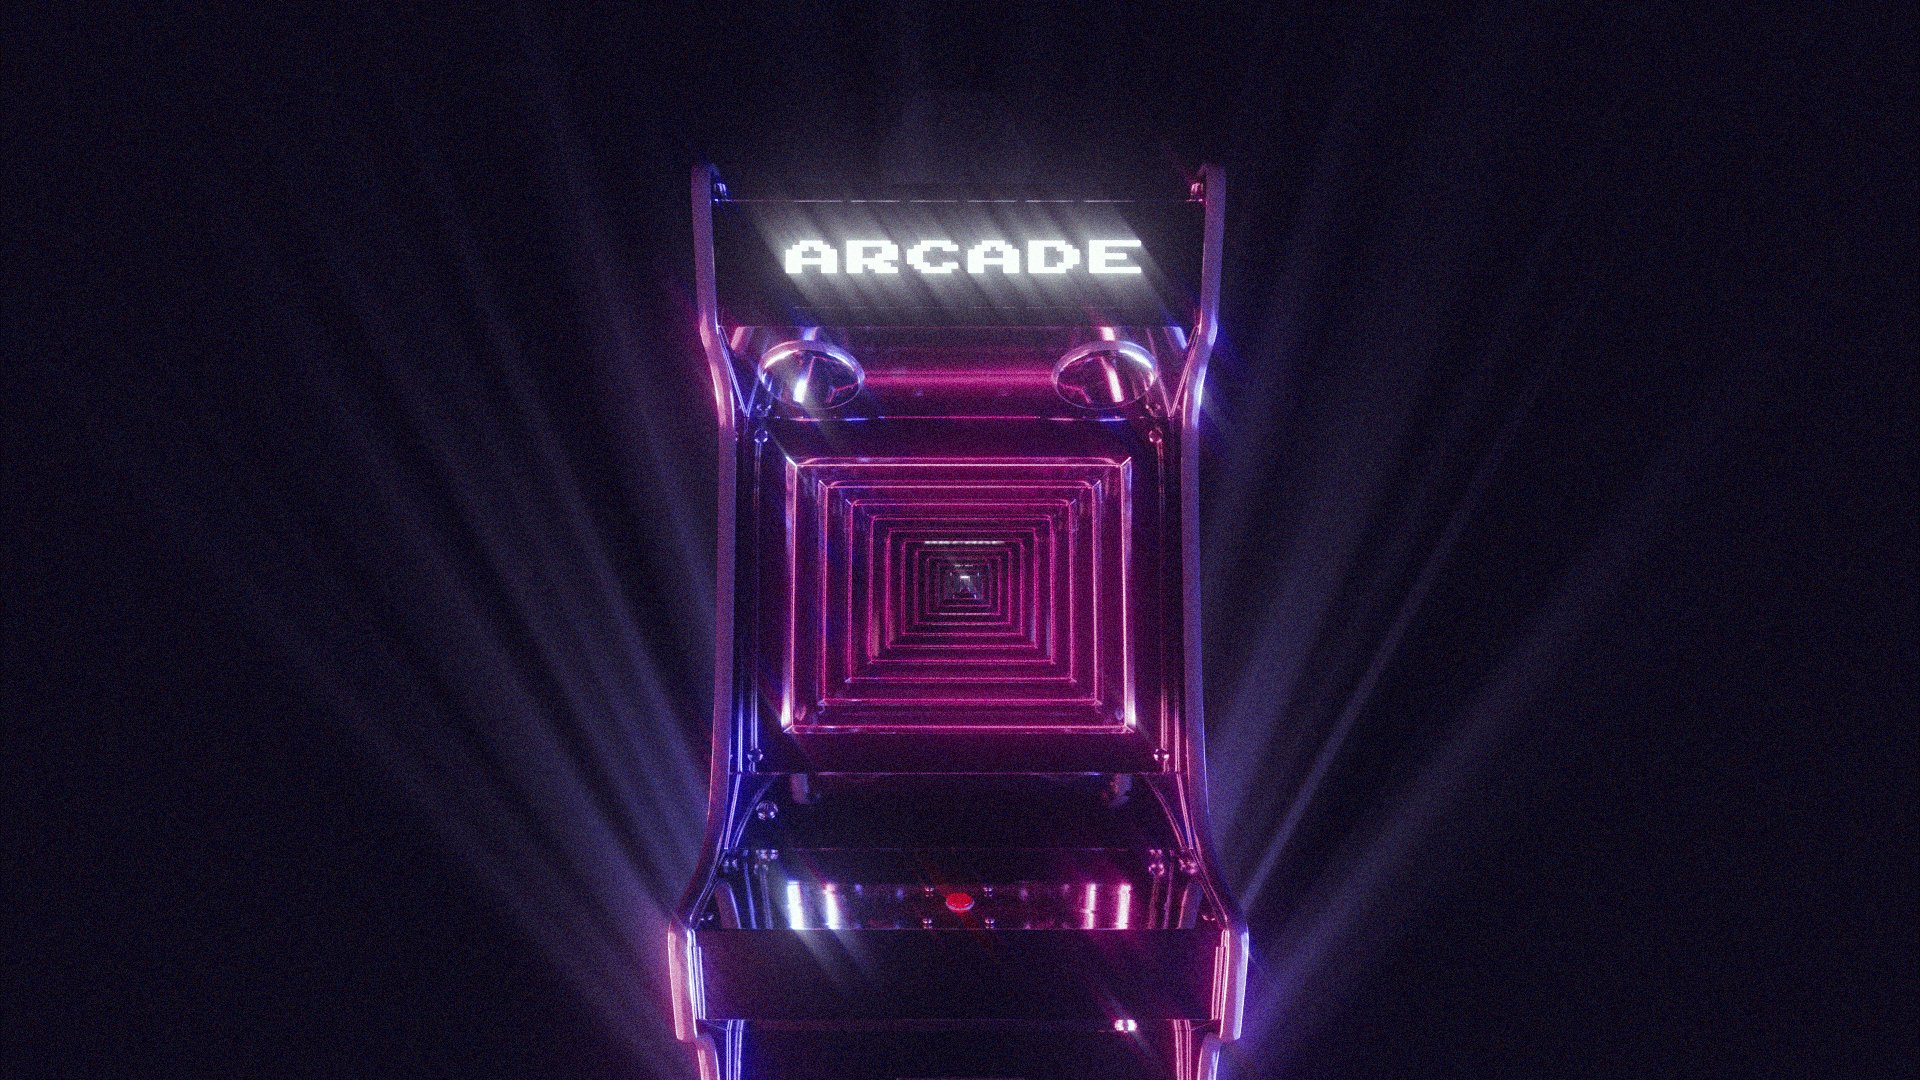 Arcade_20230316_02.jpeg